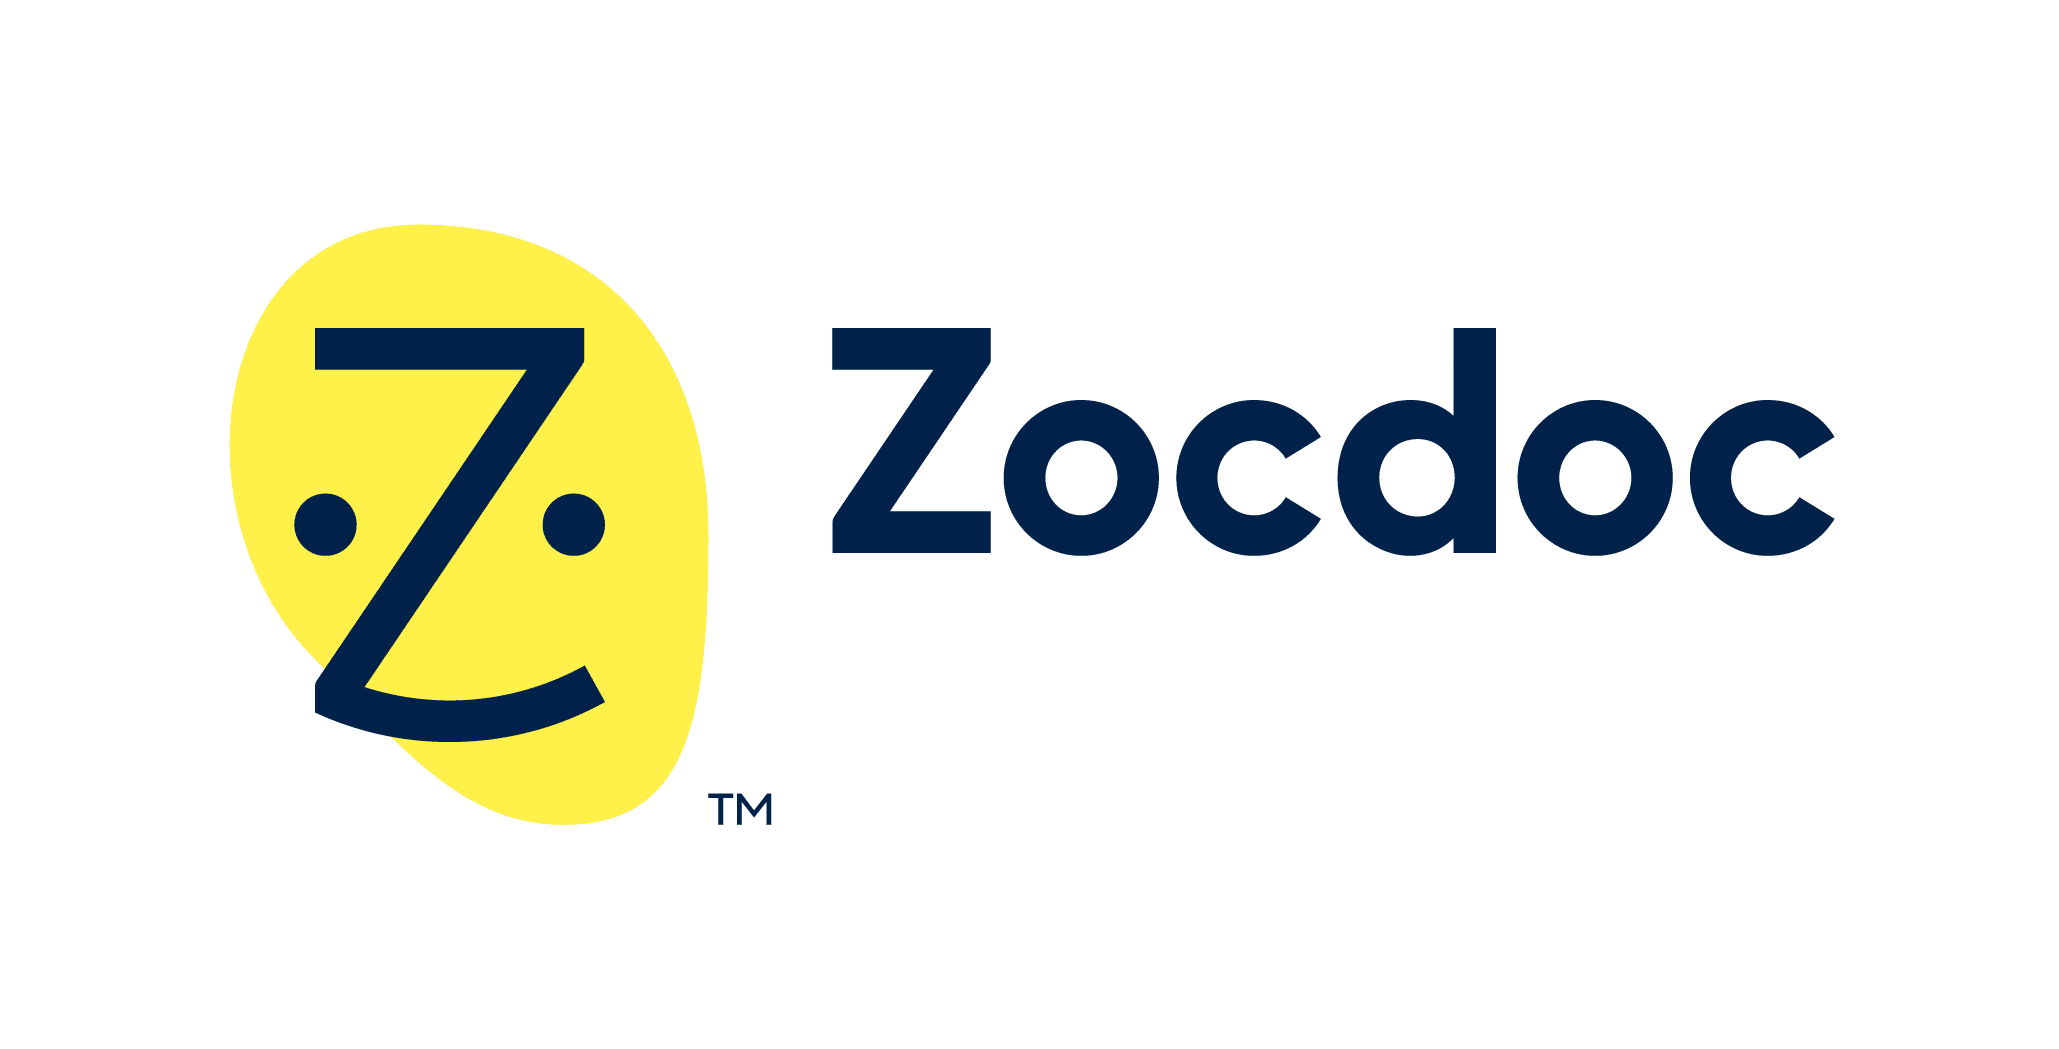 ZocDoc_logo